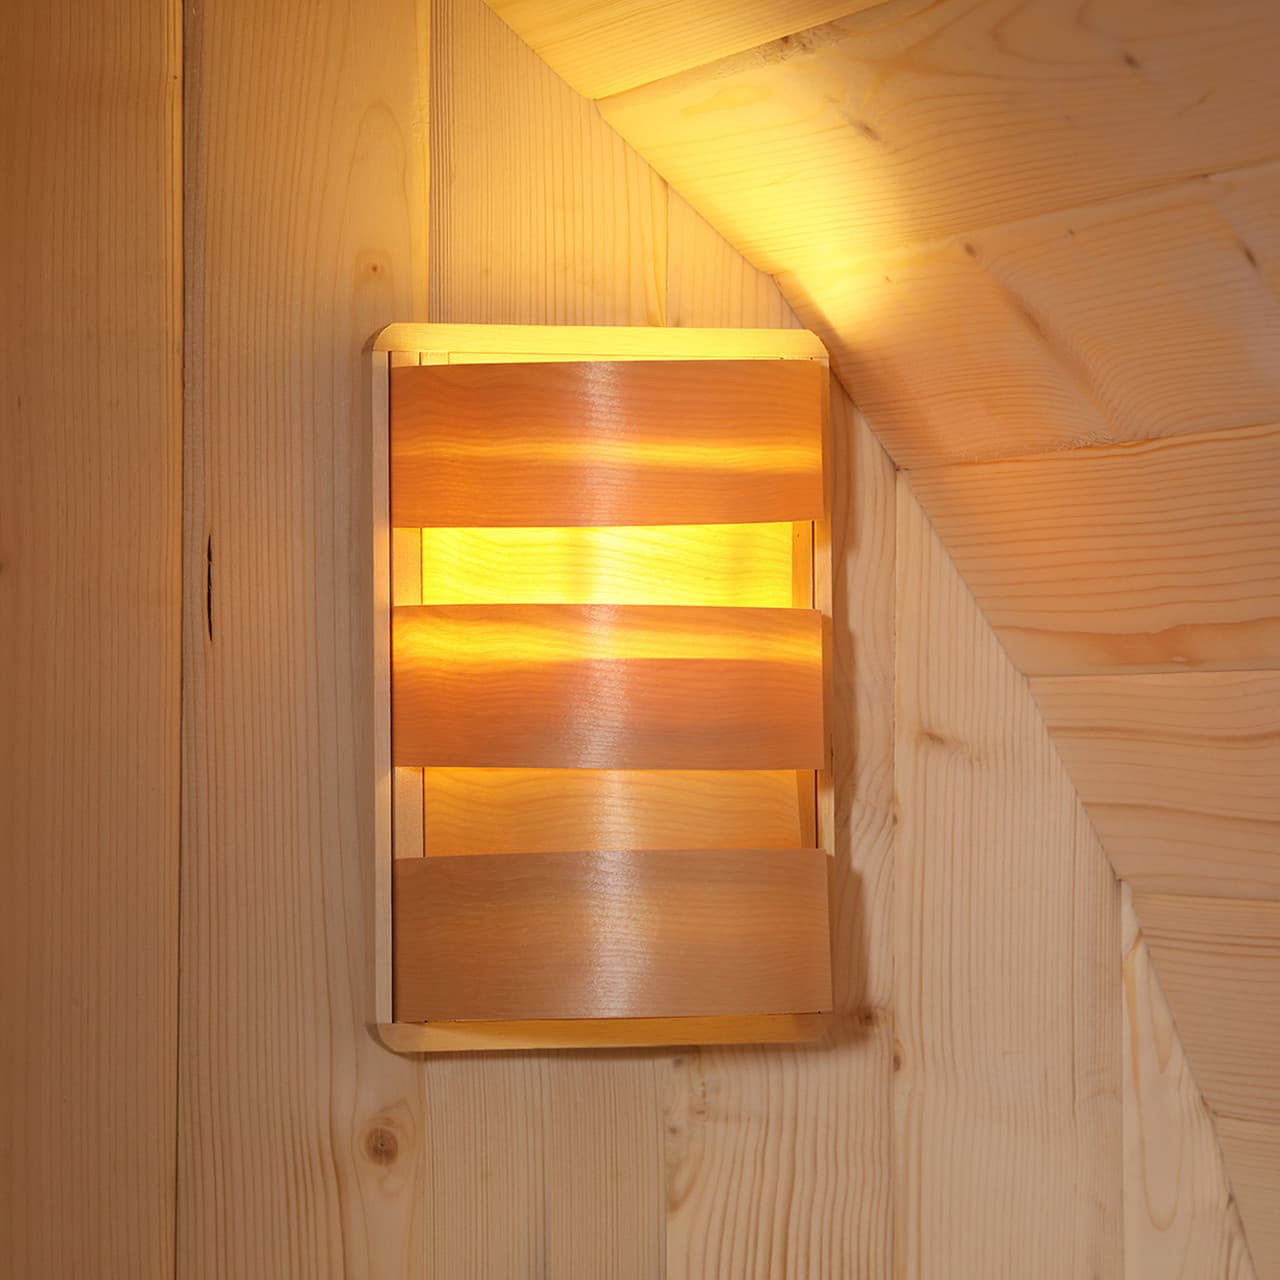 Aleko Outdoor Rustic Cedar Square Sauna – 6 Person – 6 kW UL Certified Electric Heater SRCE6HULU-AP - Serenity Provision